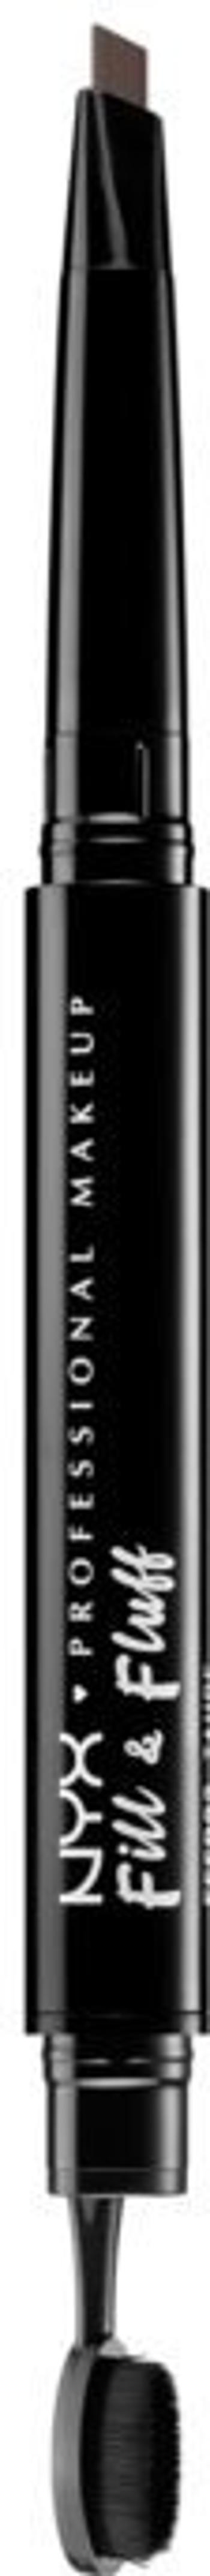 NYX Professional Makeup Fill & Fluff Eyebrow Pomade Pencil ceruzka na obočie - Ash Brown 0.2 g